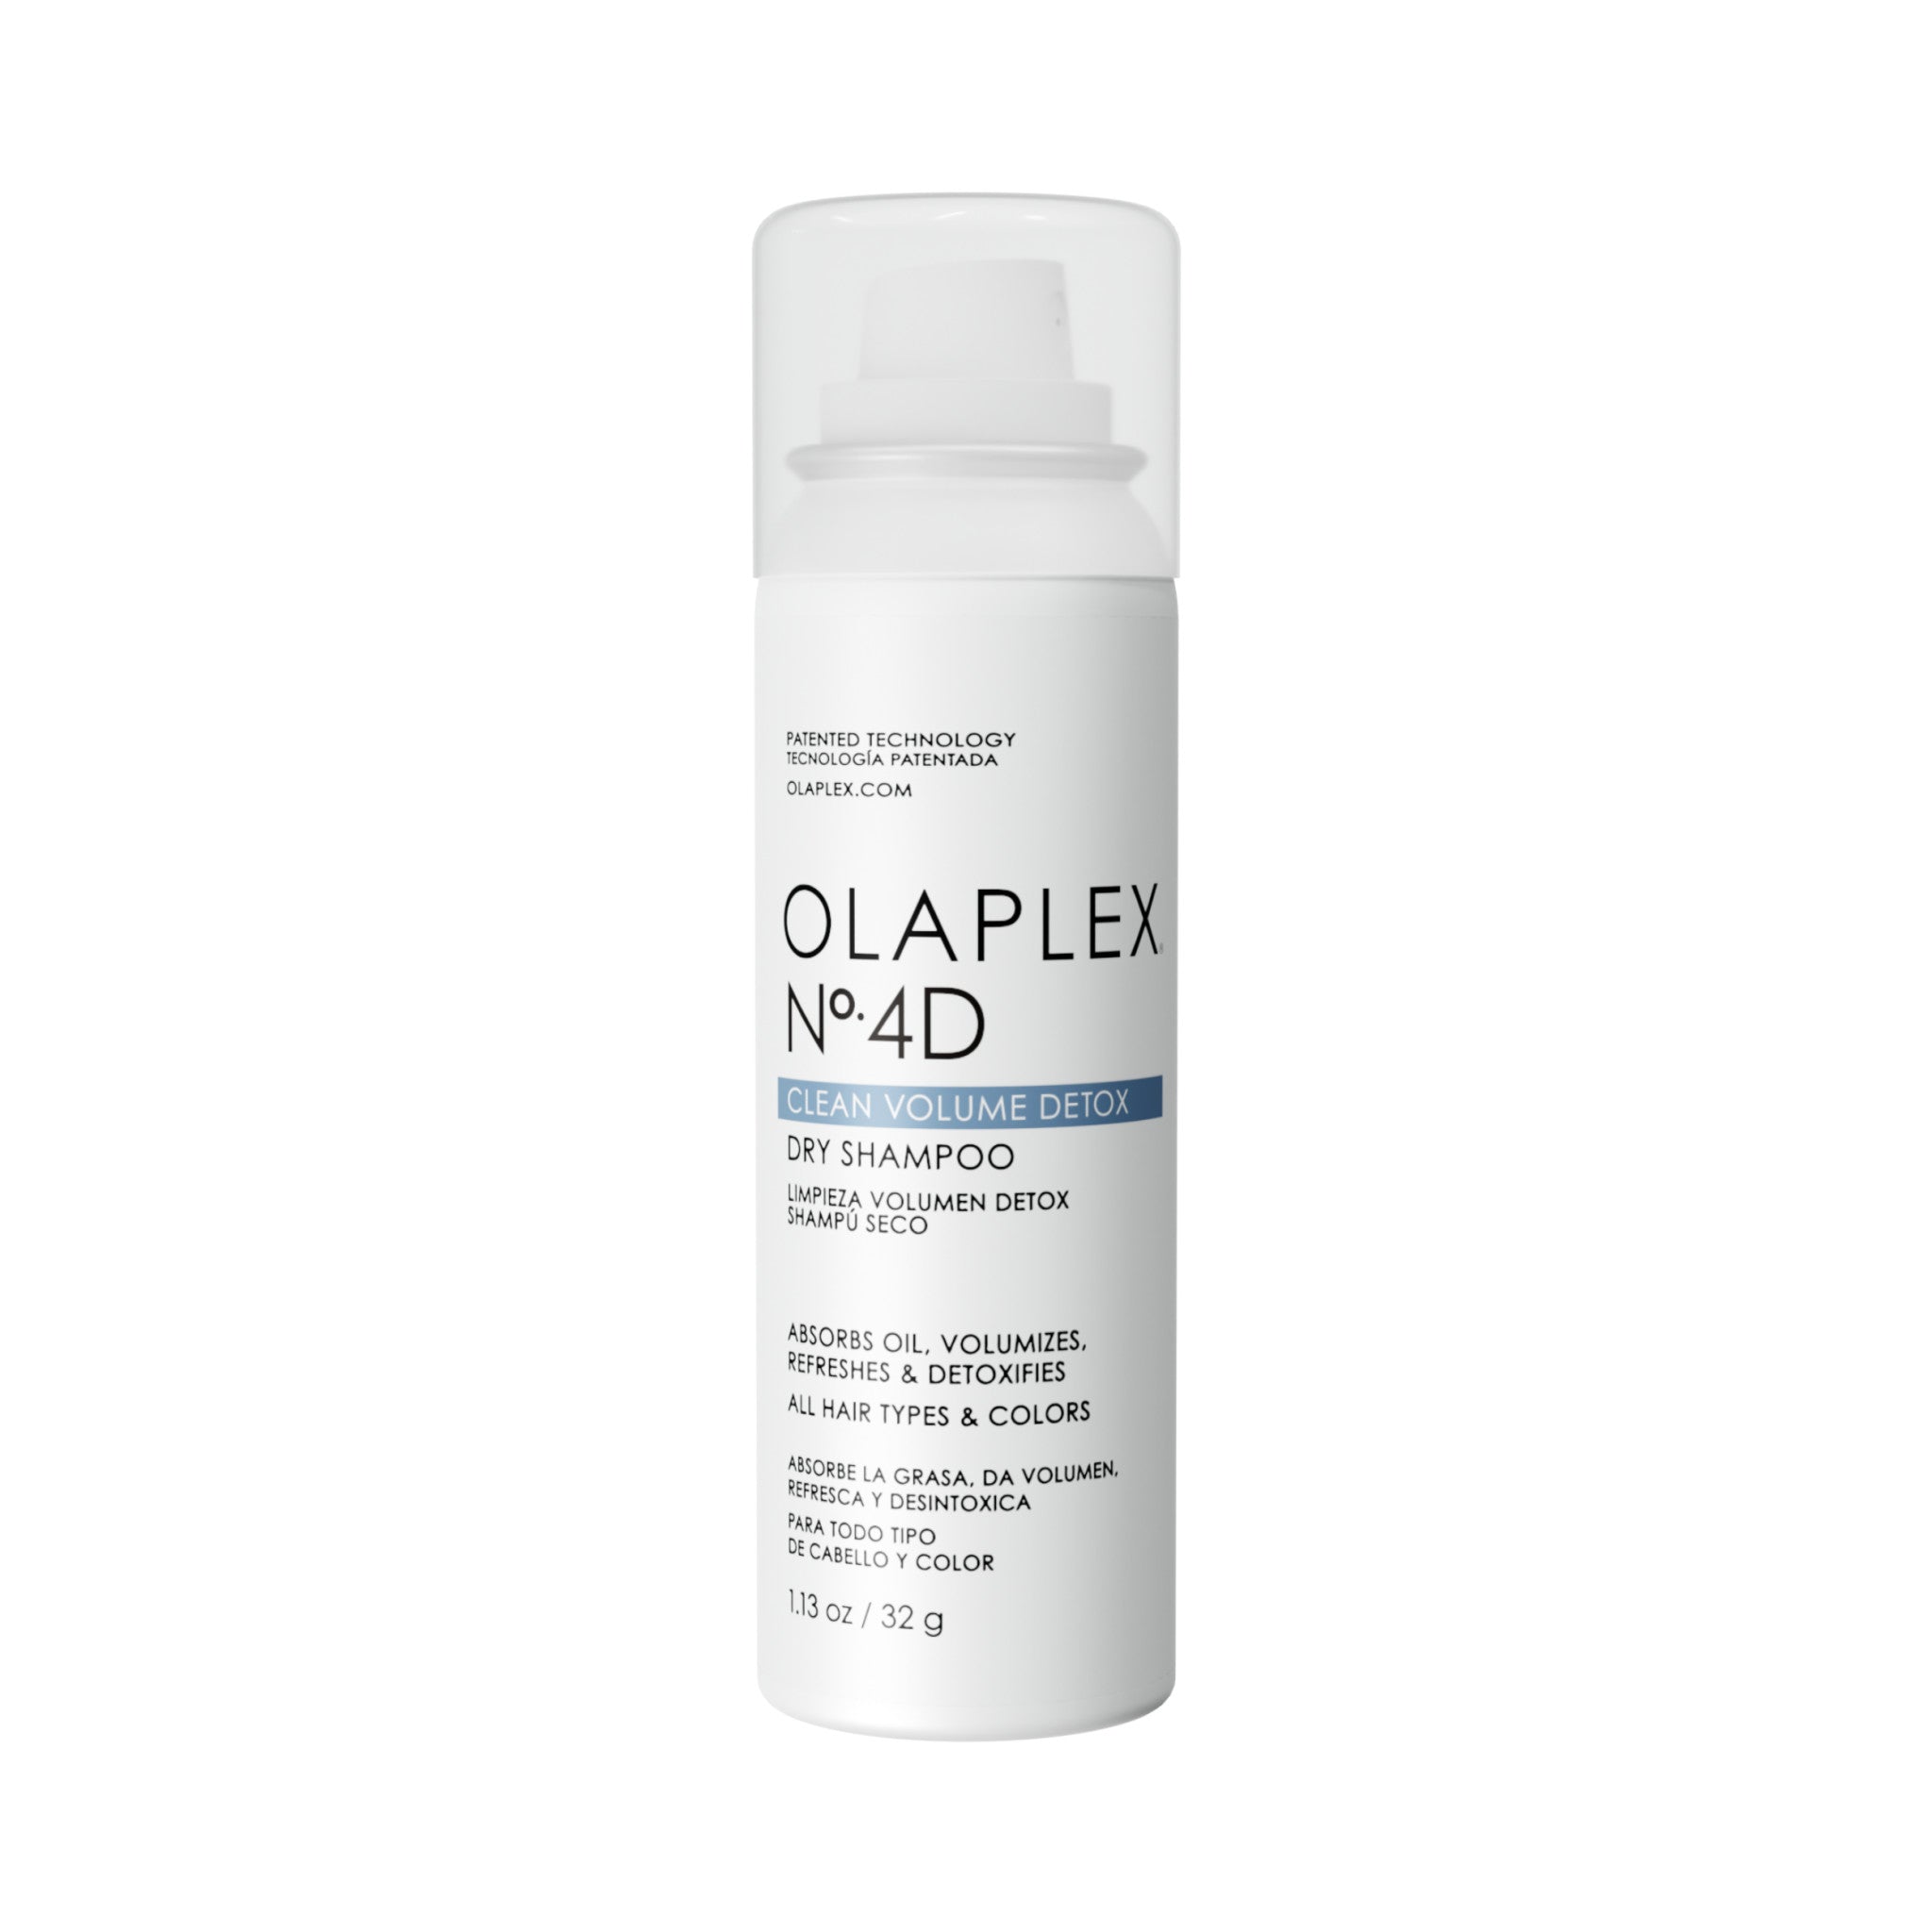 Olaplex No. 4D Clean Volume Detox Dry Shampoo Size variant: 1.13 main image.